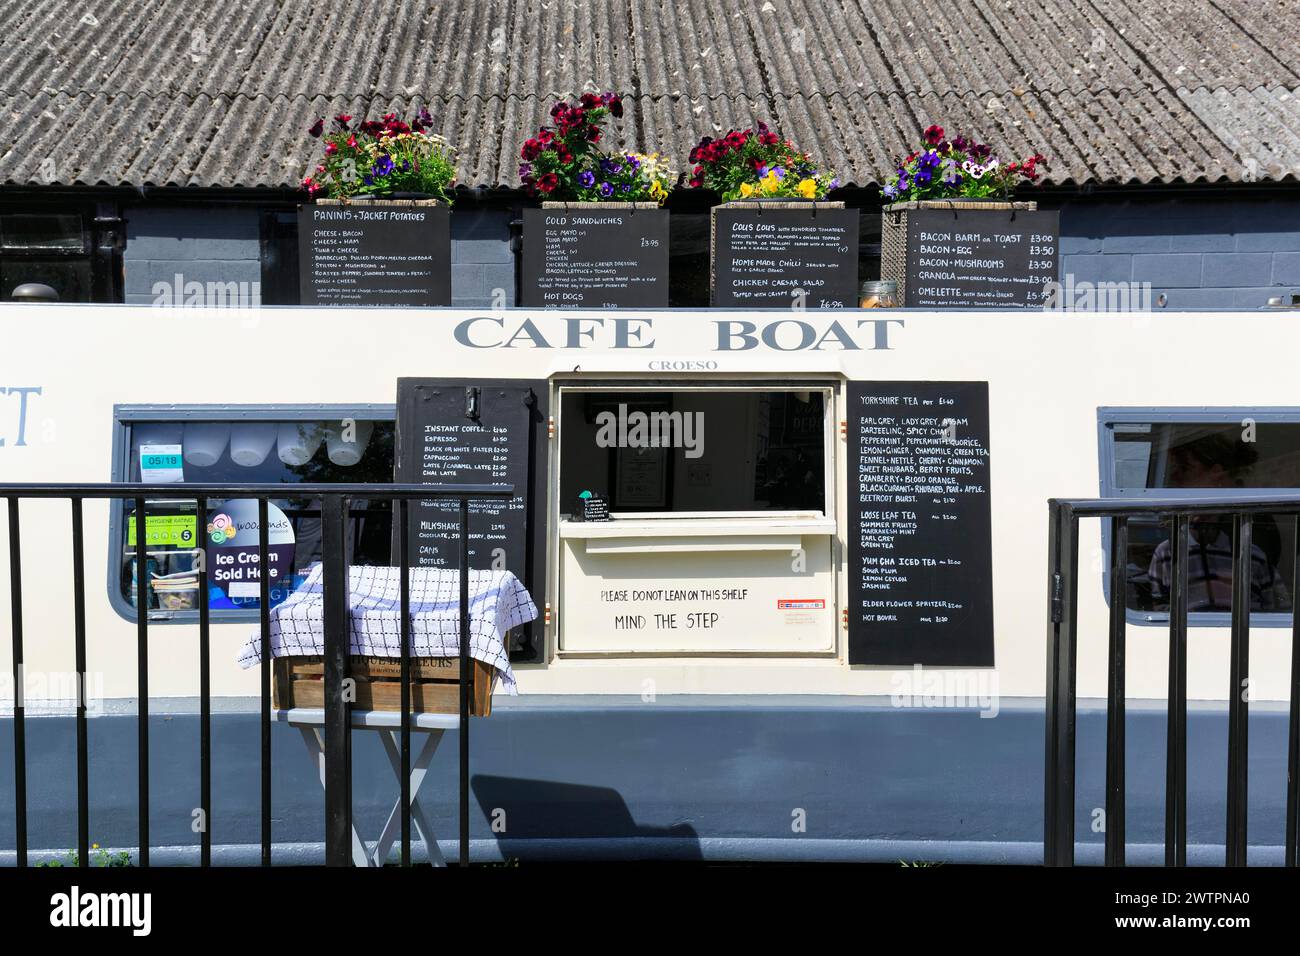 Cafe in boat, narrowboat, canal boat, restaurant, Llangollen Wharf, Llangollen Canal, Trevor, Wrexham, Wales, United Kingdom Stock Photo